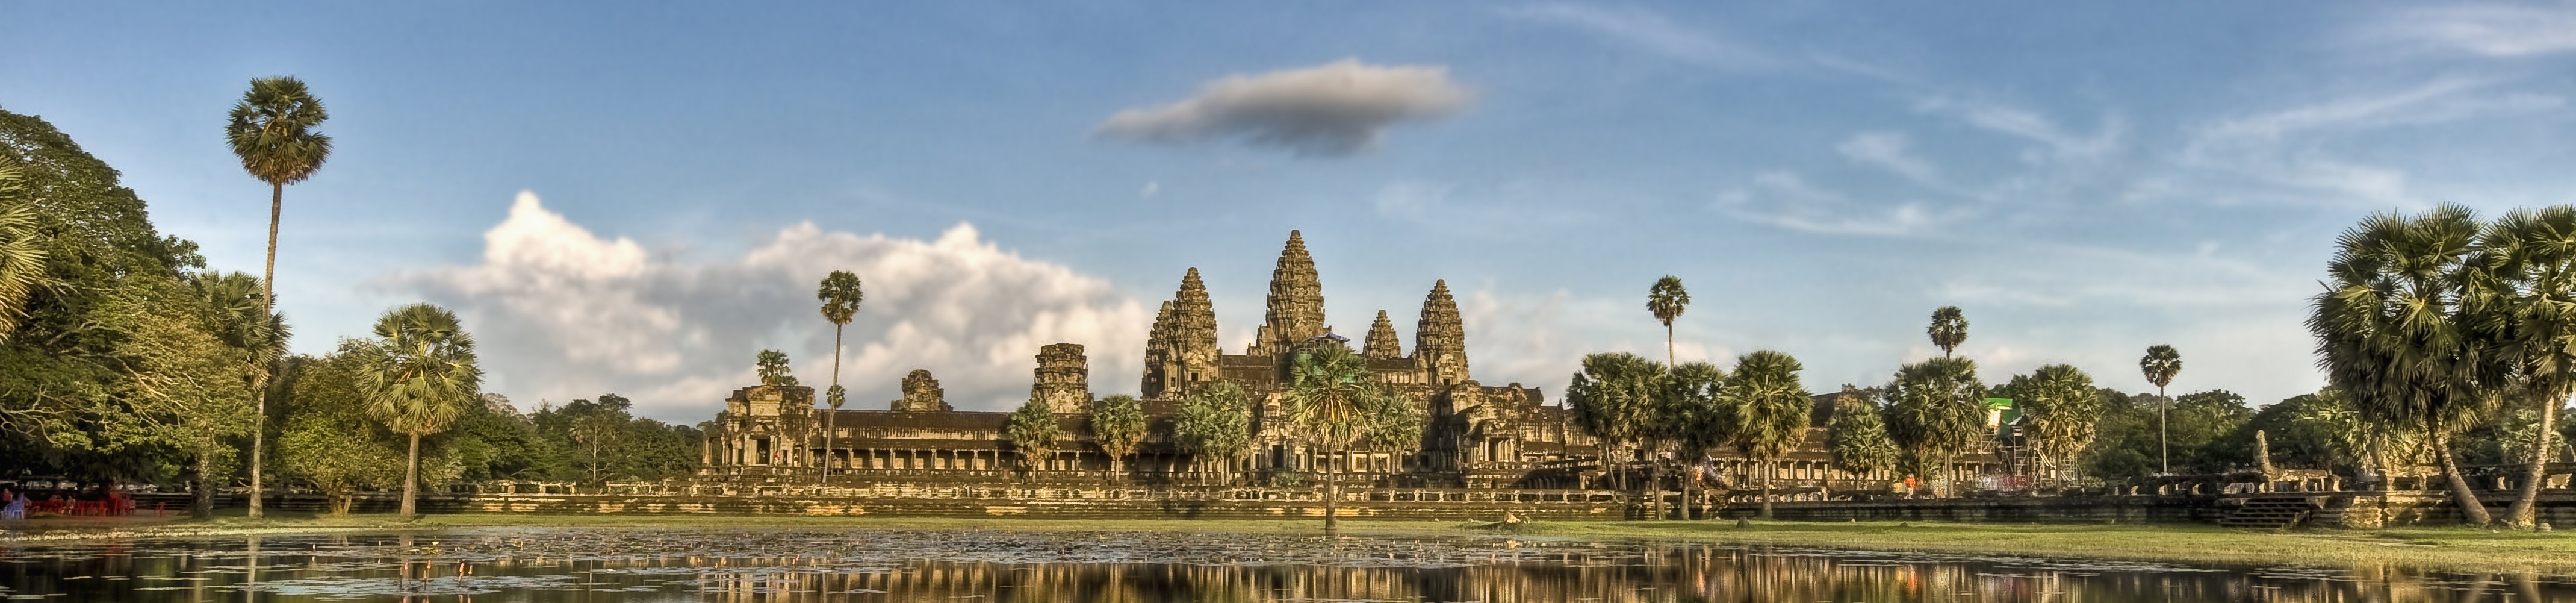 Image of Angkor Temples History & Evolution